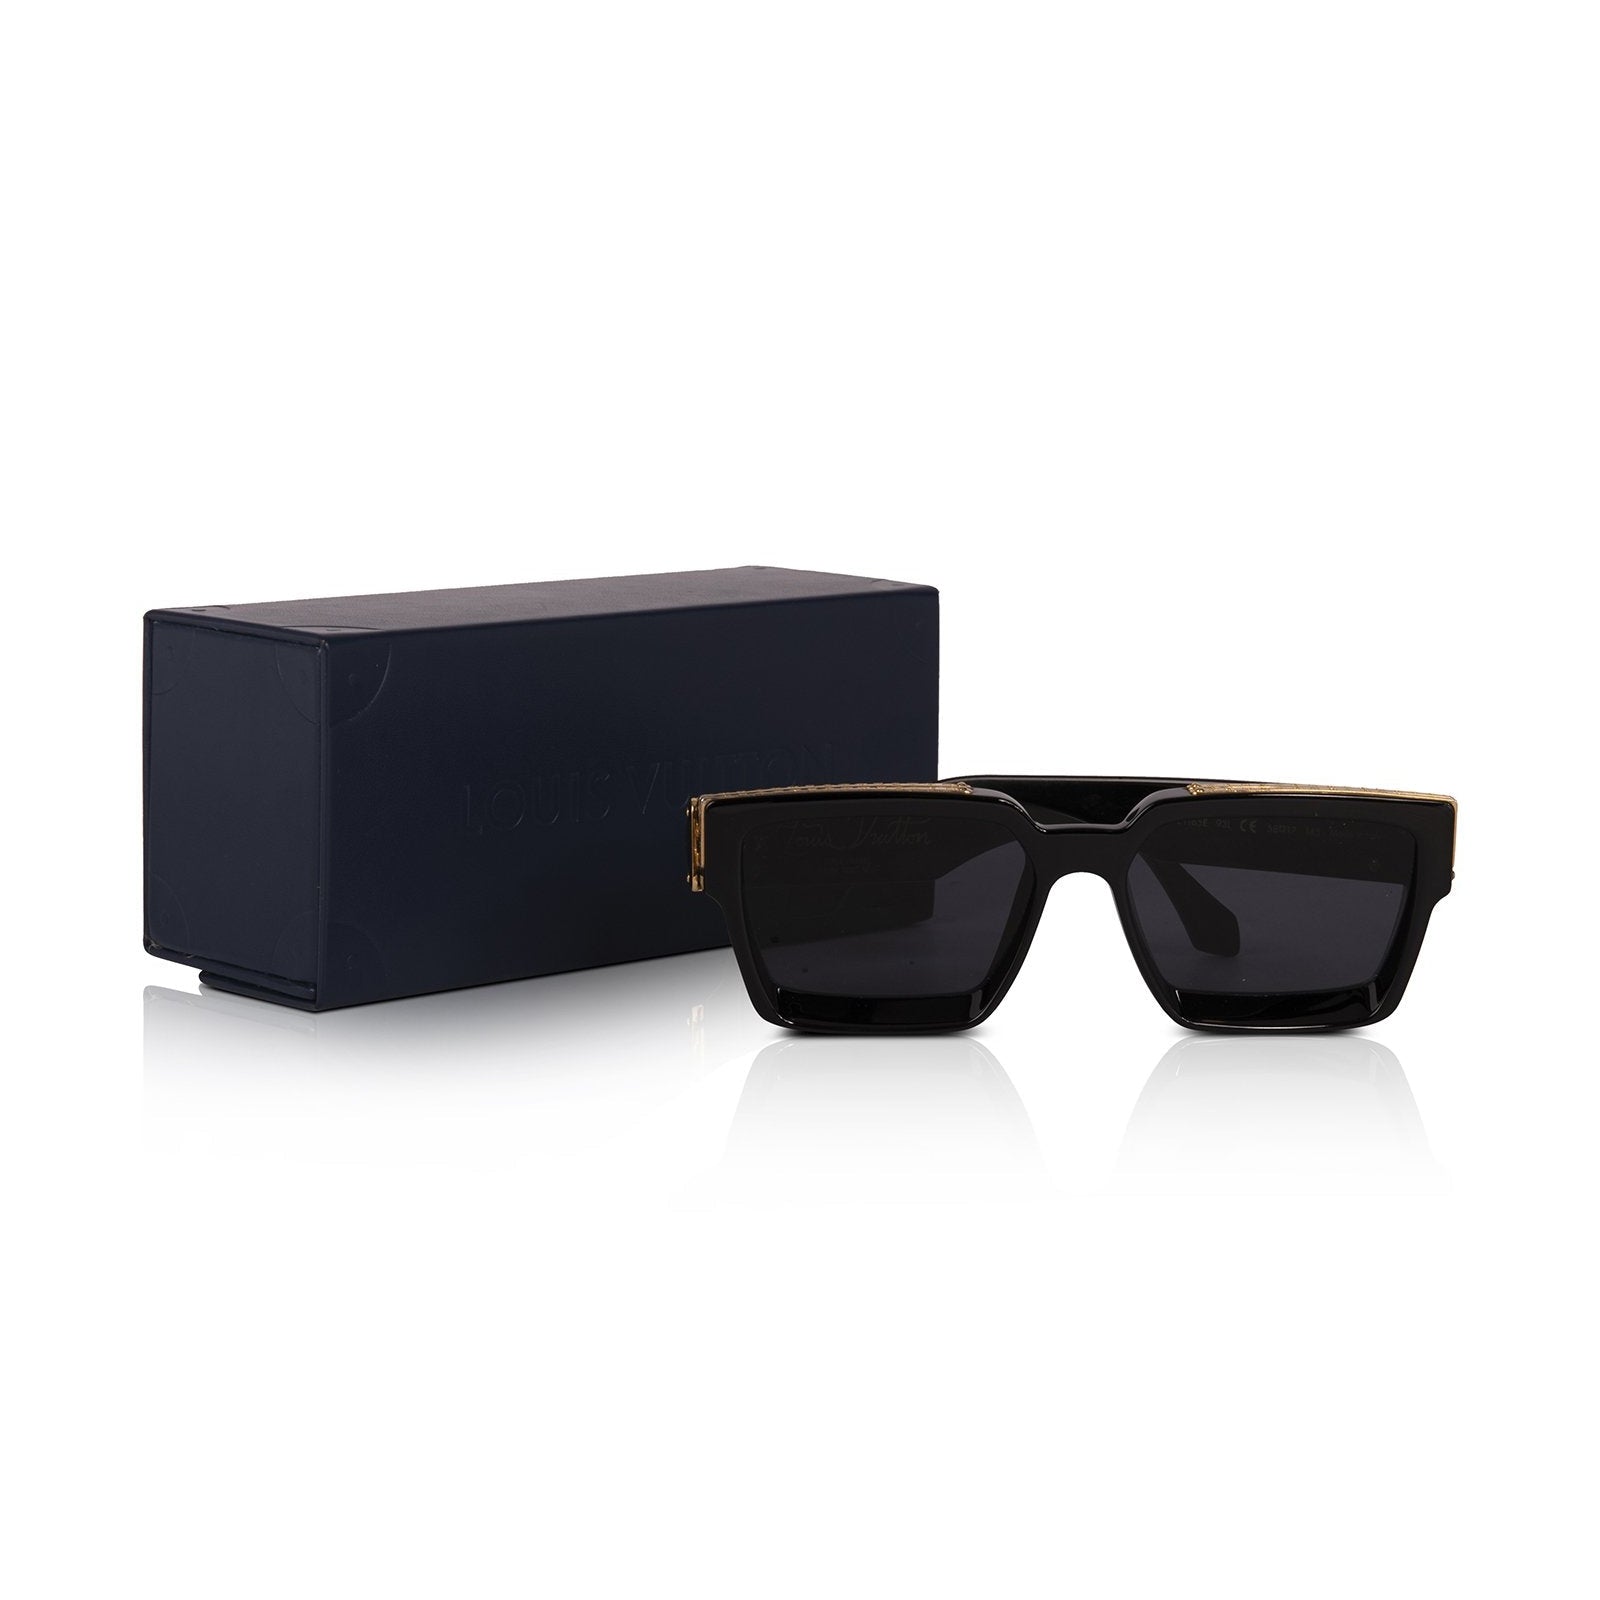 Louis Vuitton Black Plastic Frame Sunglasses for Women for sale